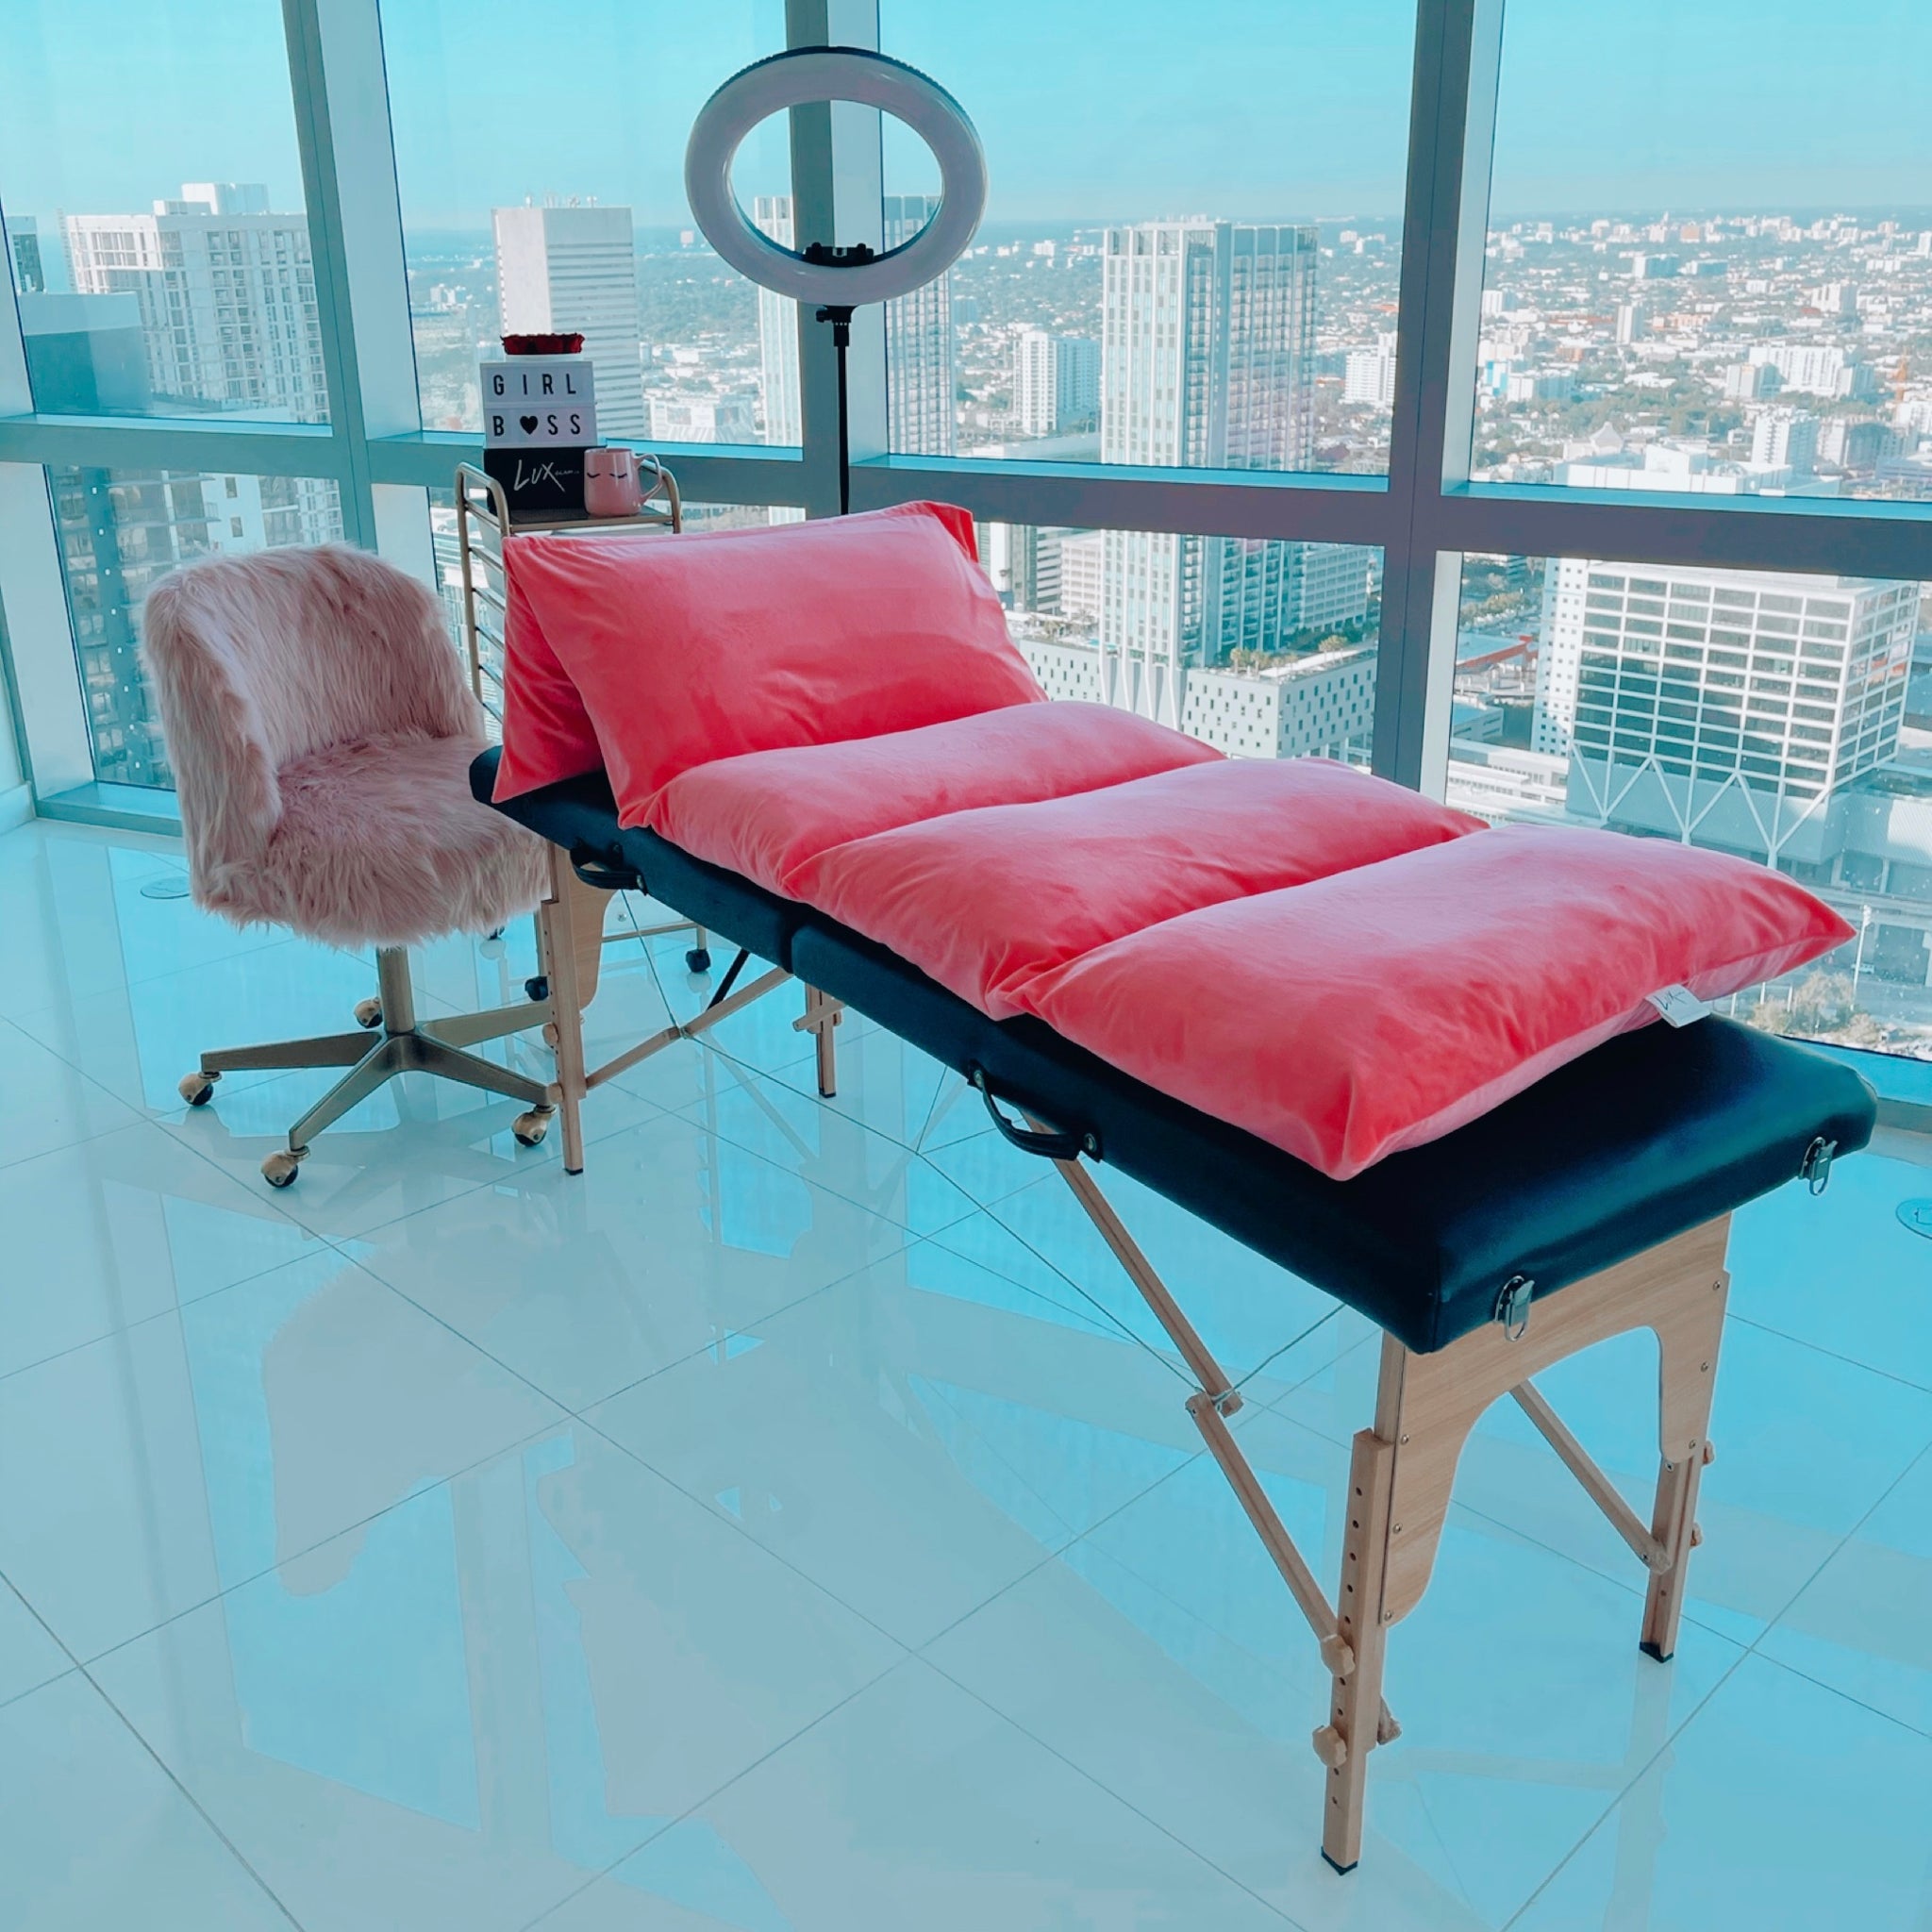  XOLLOZ Curvy Massage Bed Topper, High Density Foam Lash Bed  Cushion with Soft Touch Short Plush and Ergonomic Design